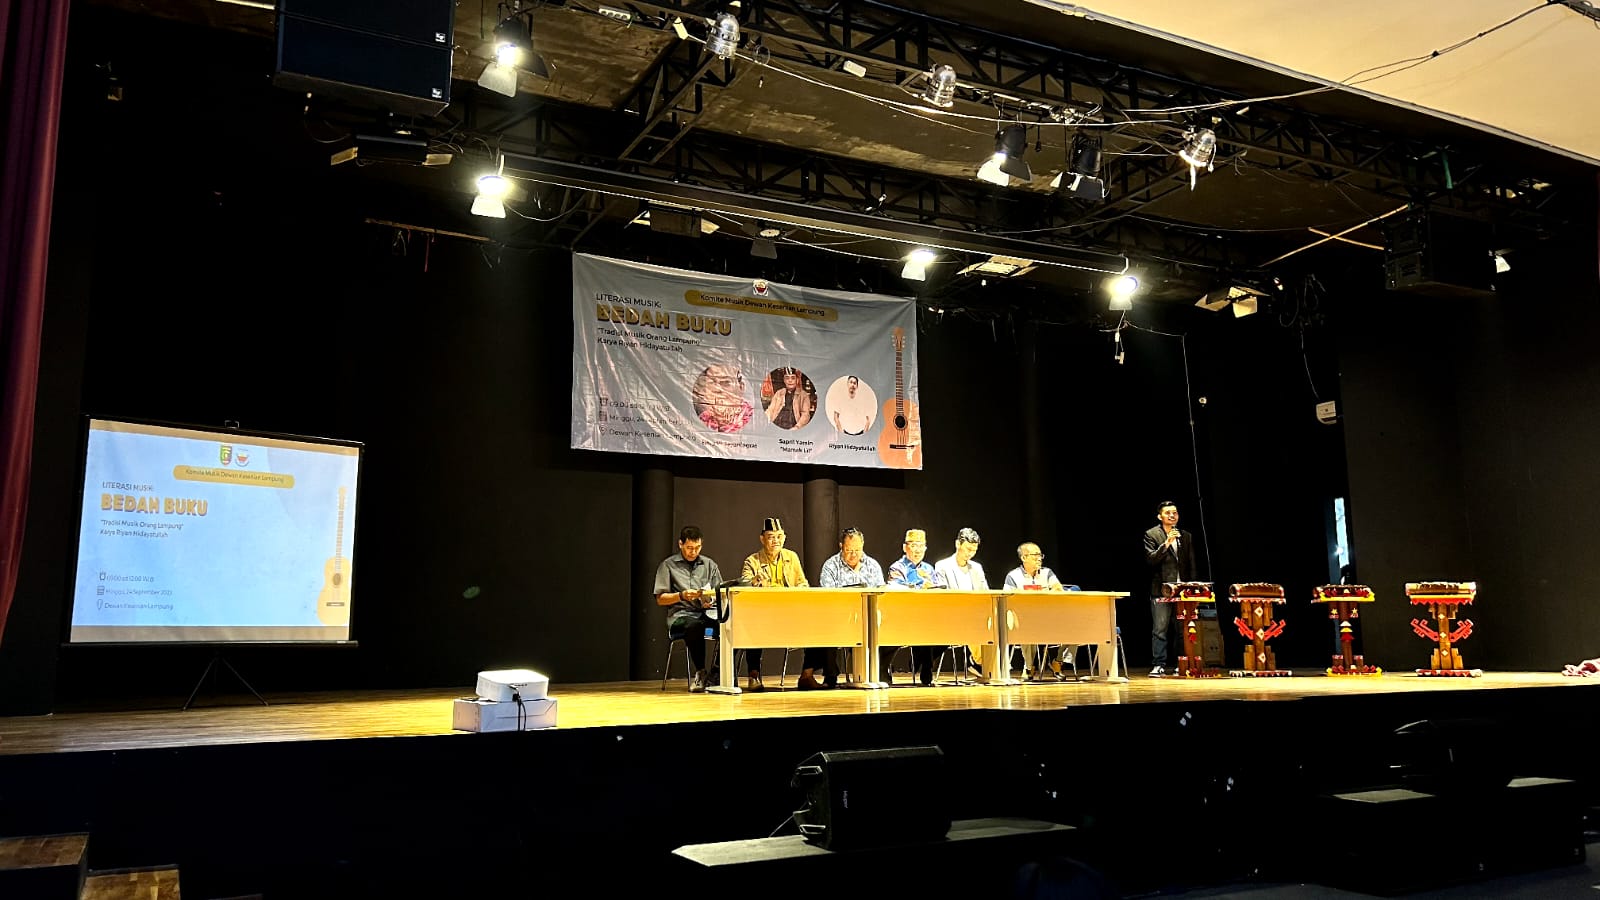 Mengulik Lampung dan Tradisi Musik Dalam Kacamata Akademisi  